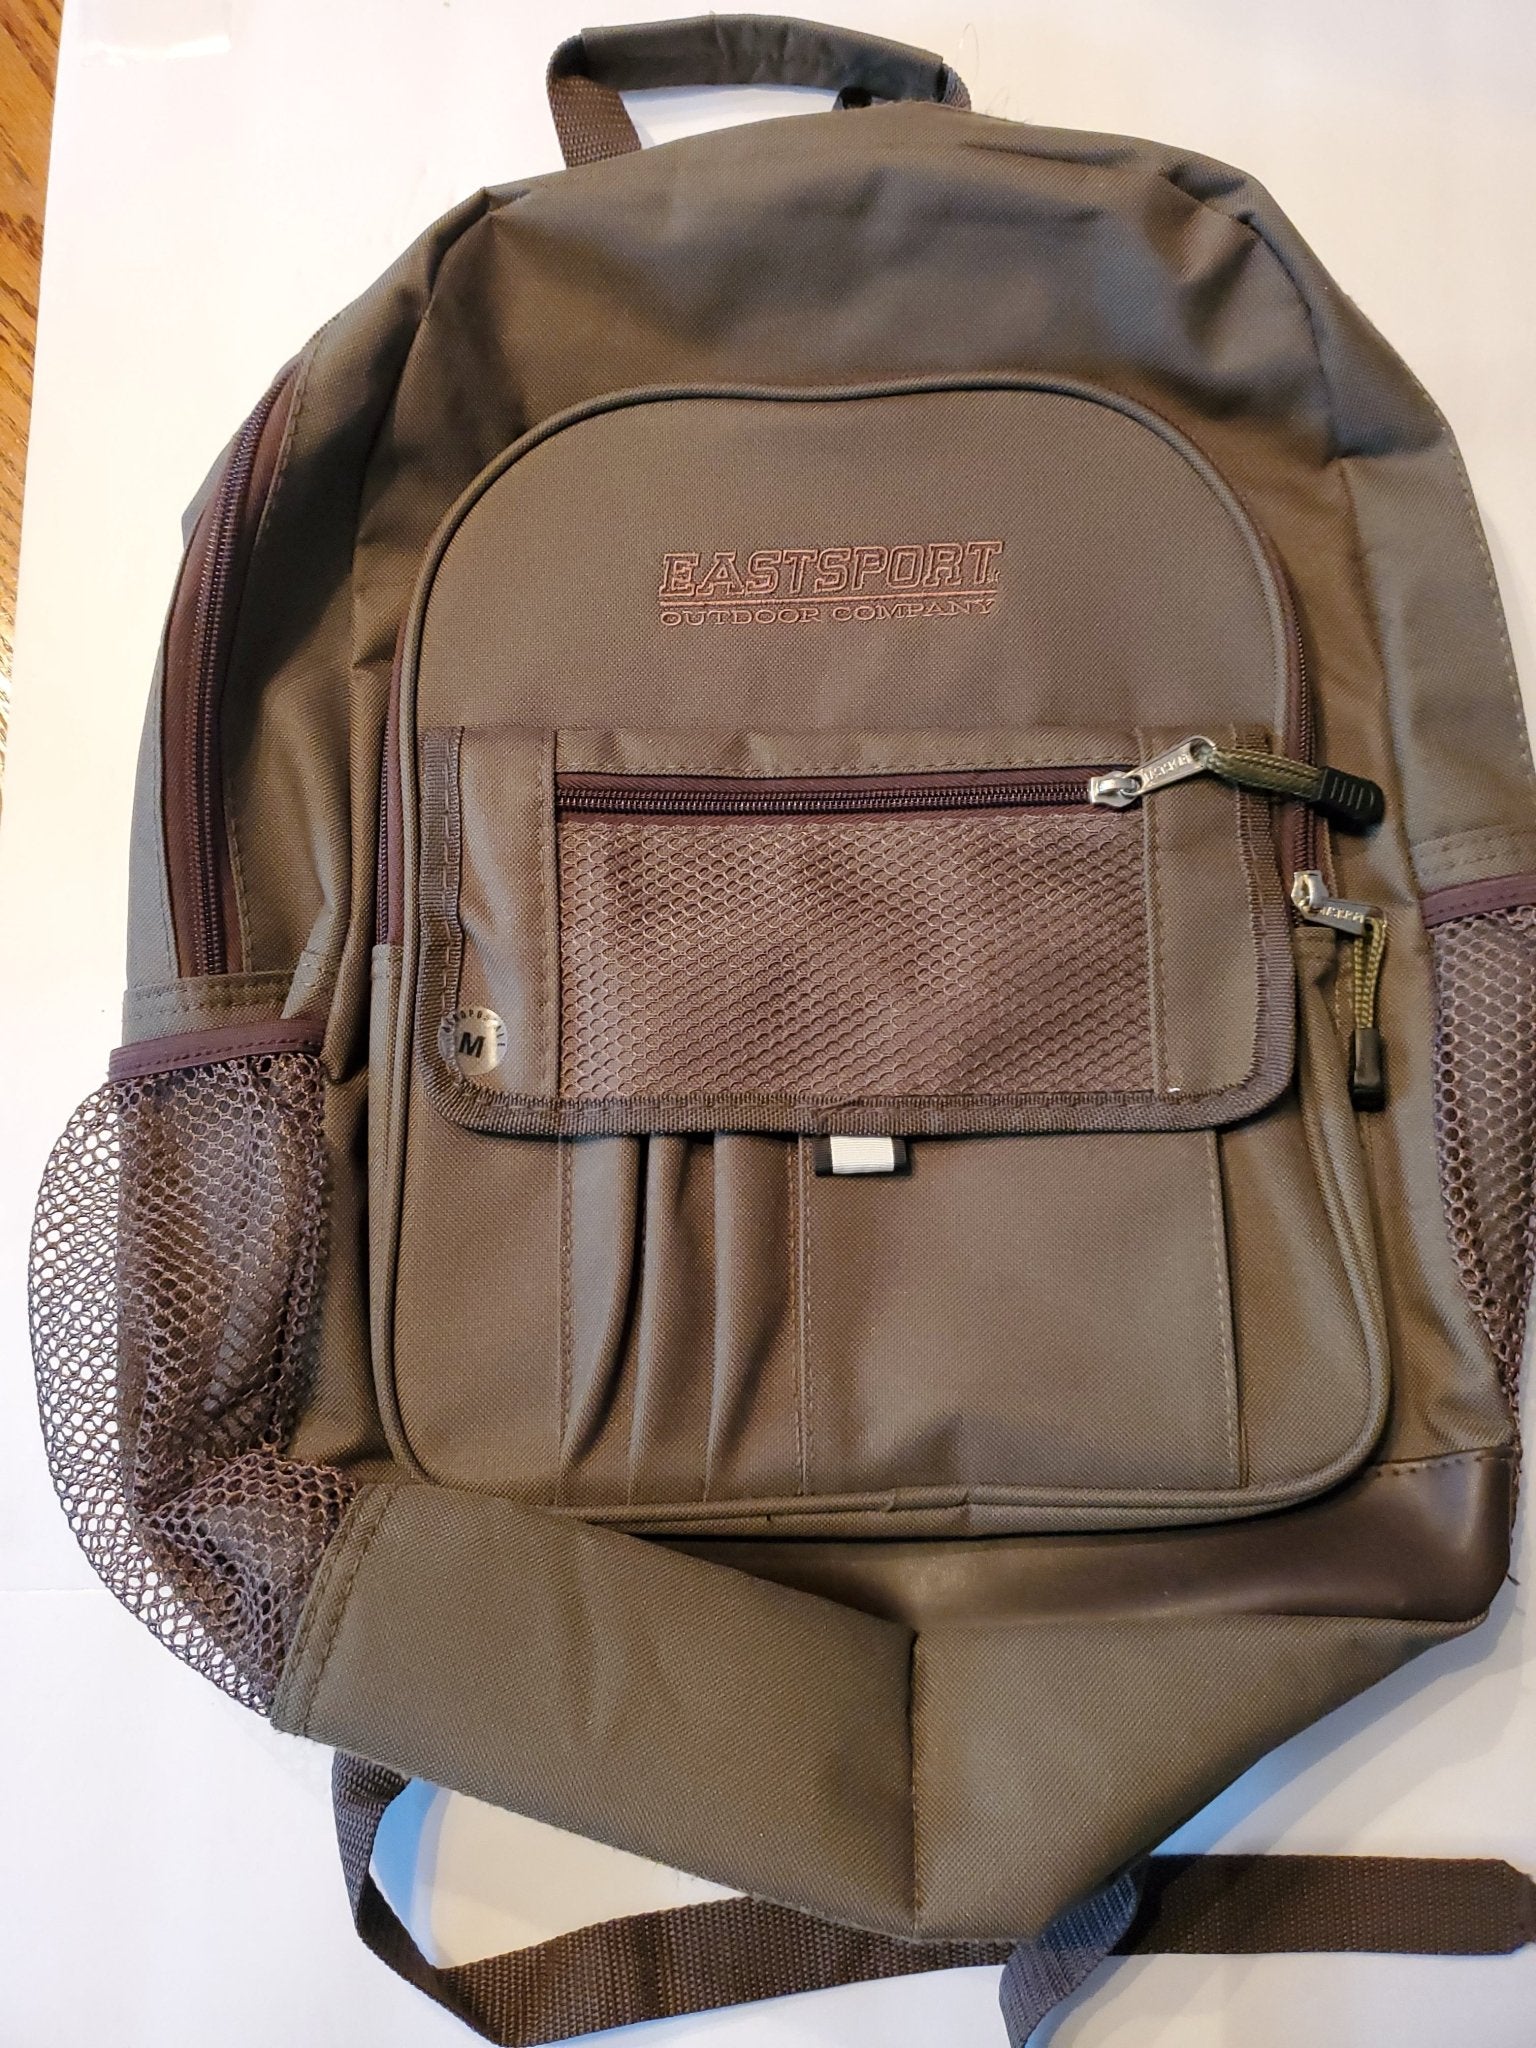 Eastsport Outdoor Company Green Backpack - Bargainwizz